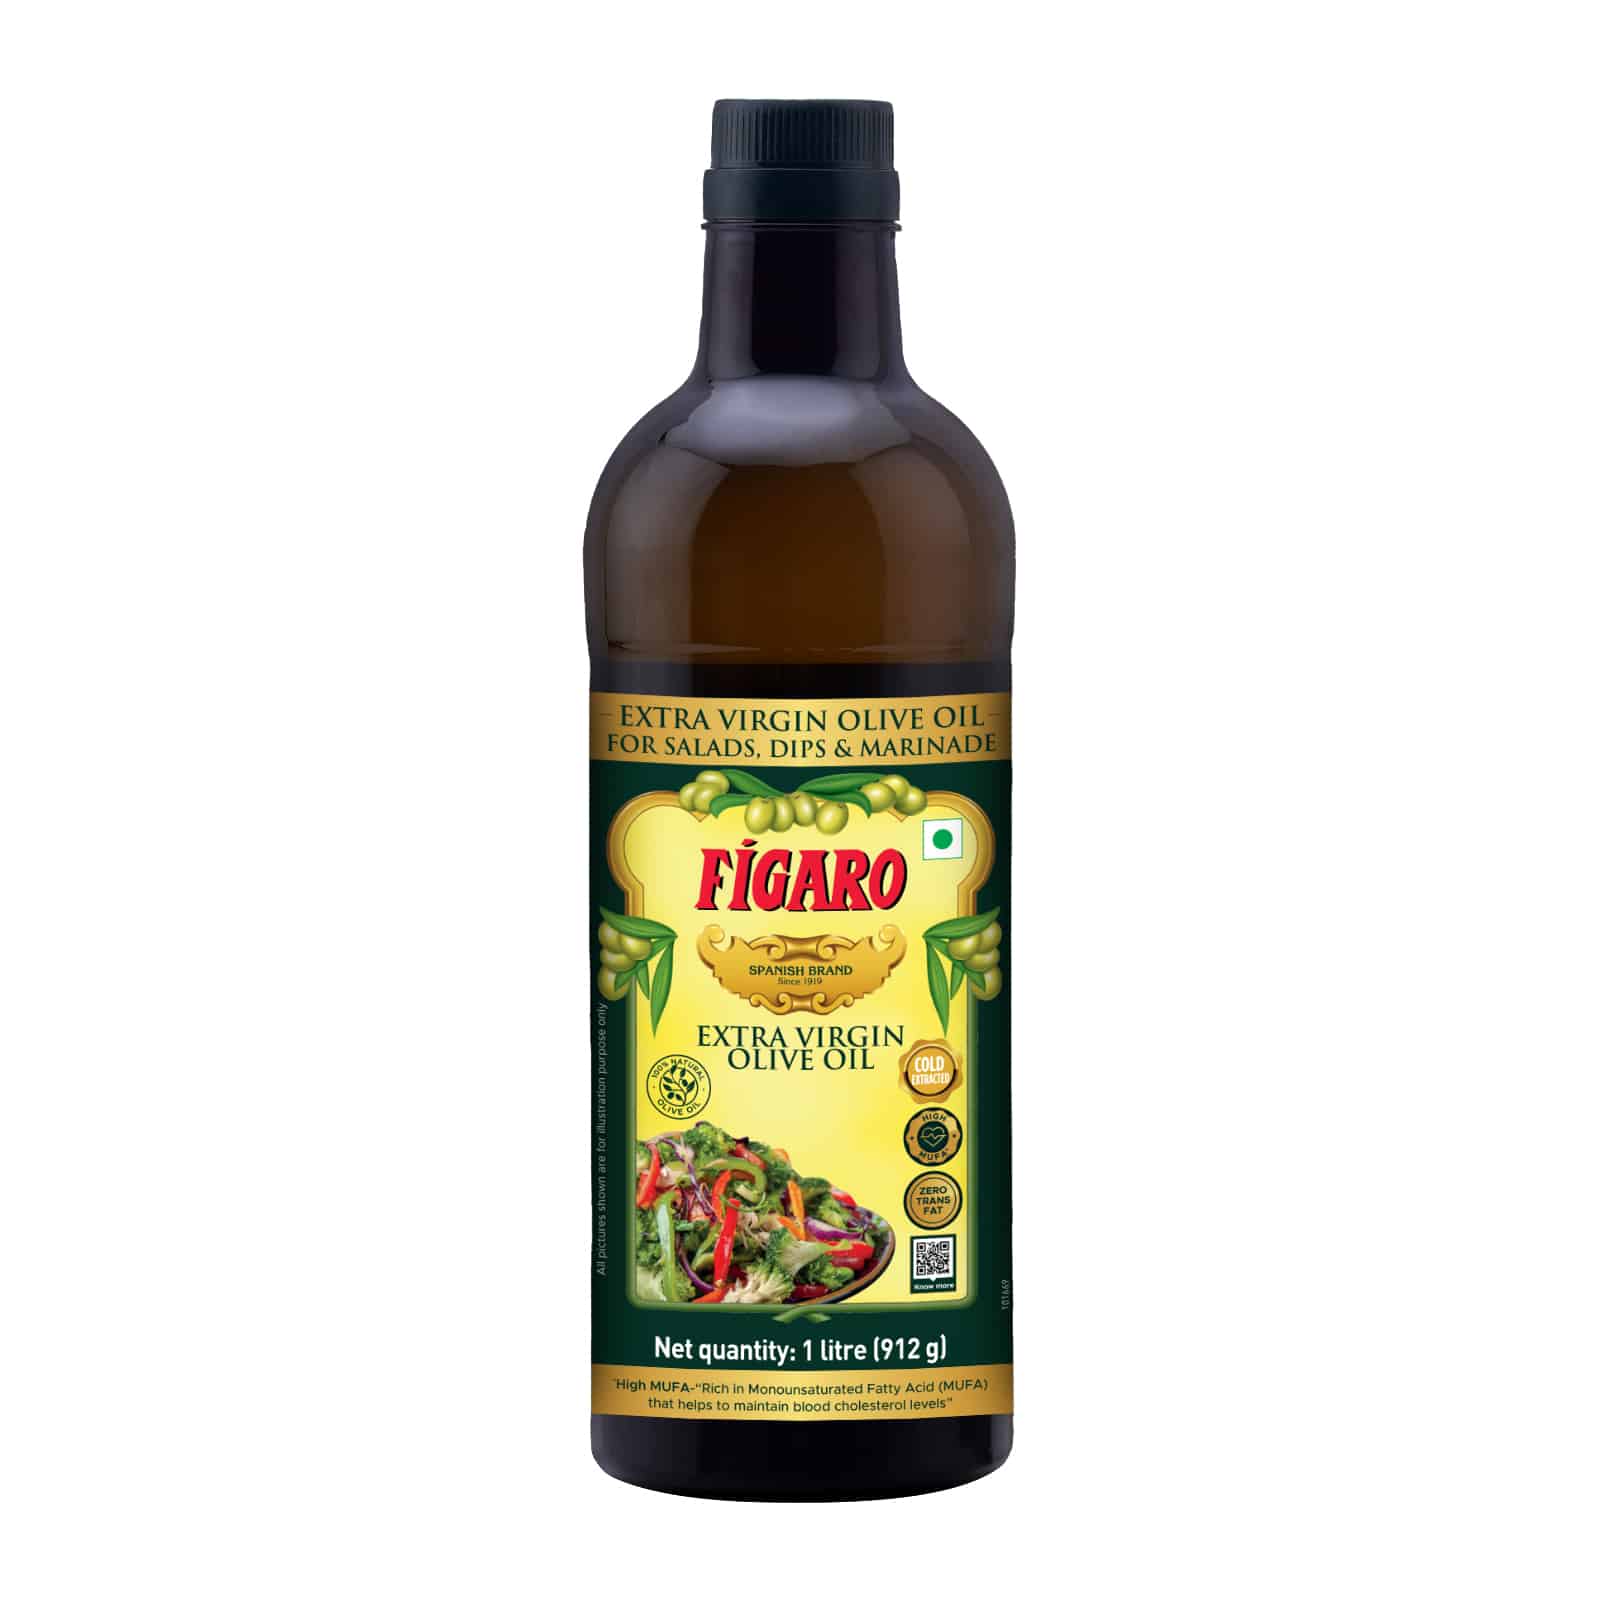 Figaro extra virgin olive oil